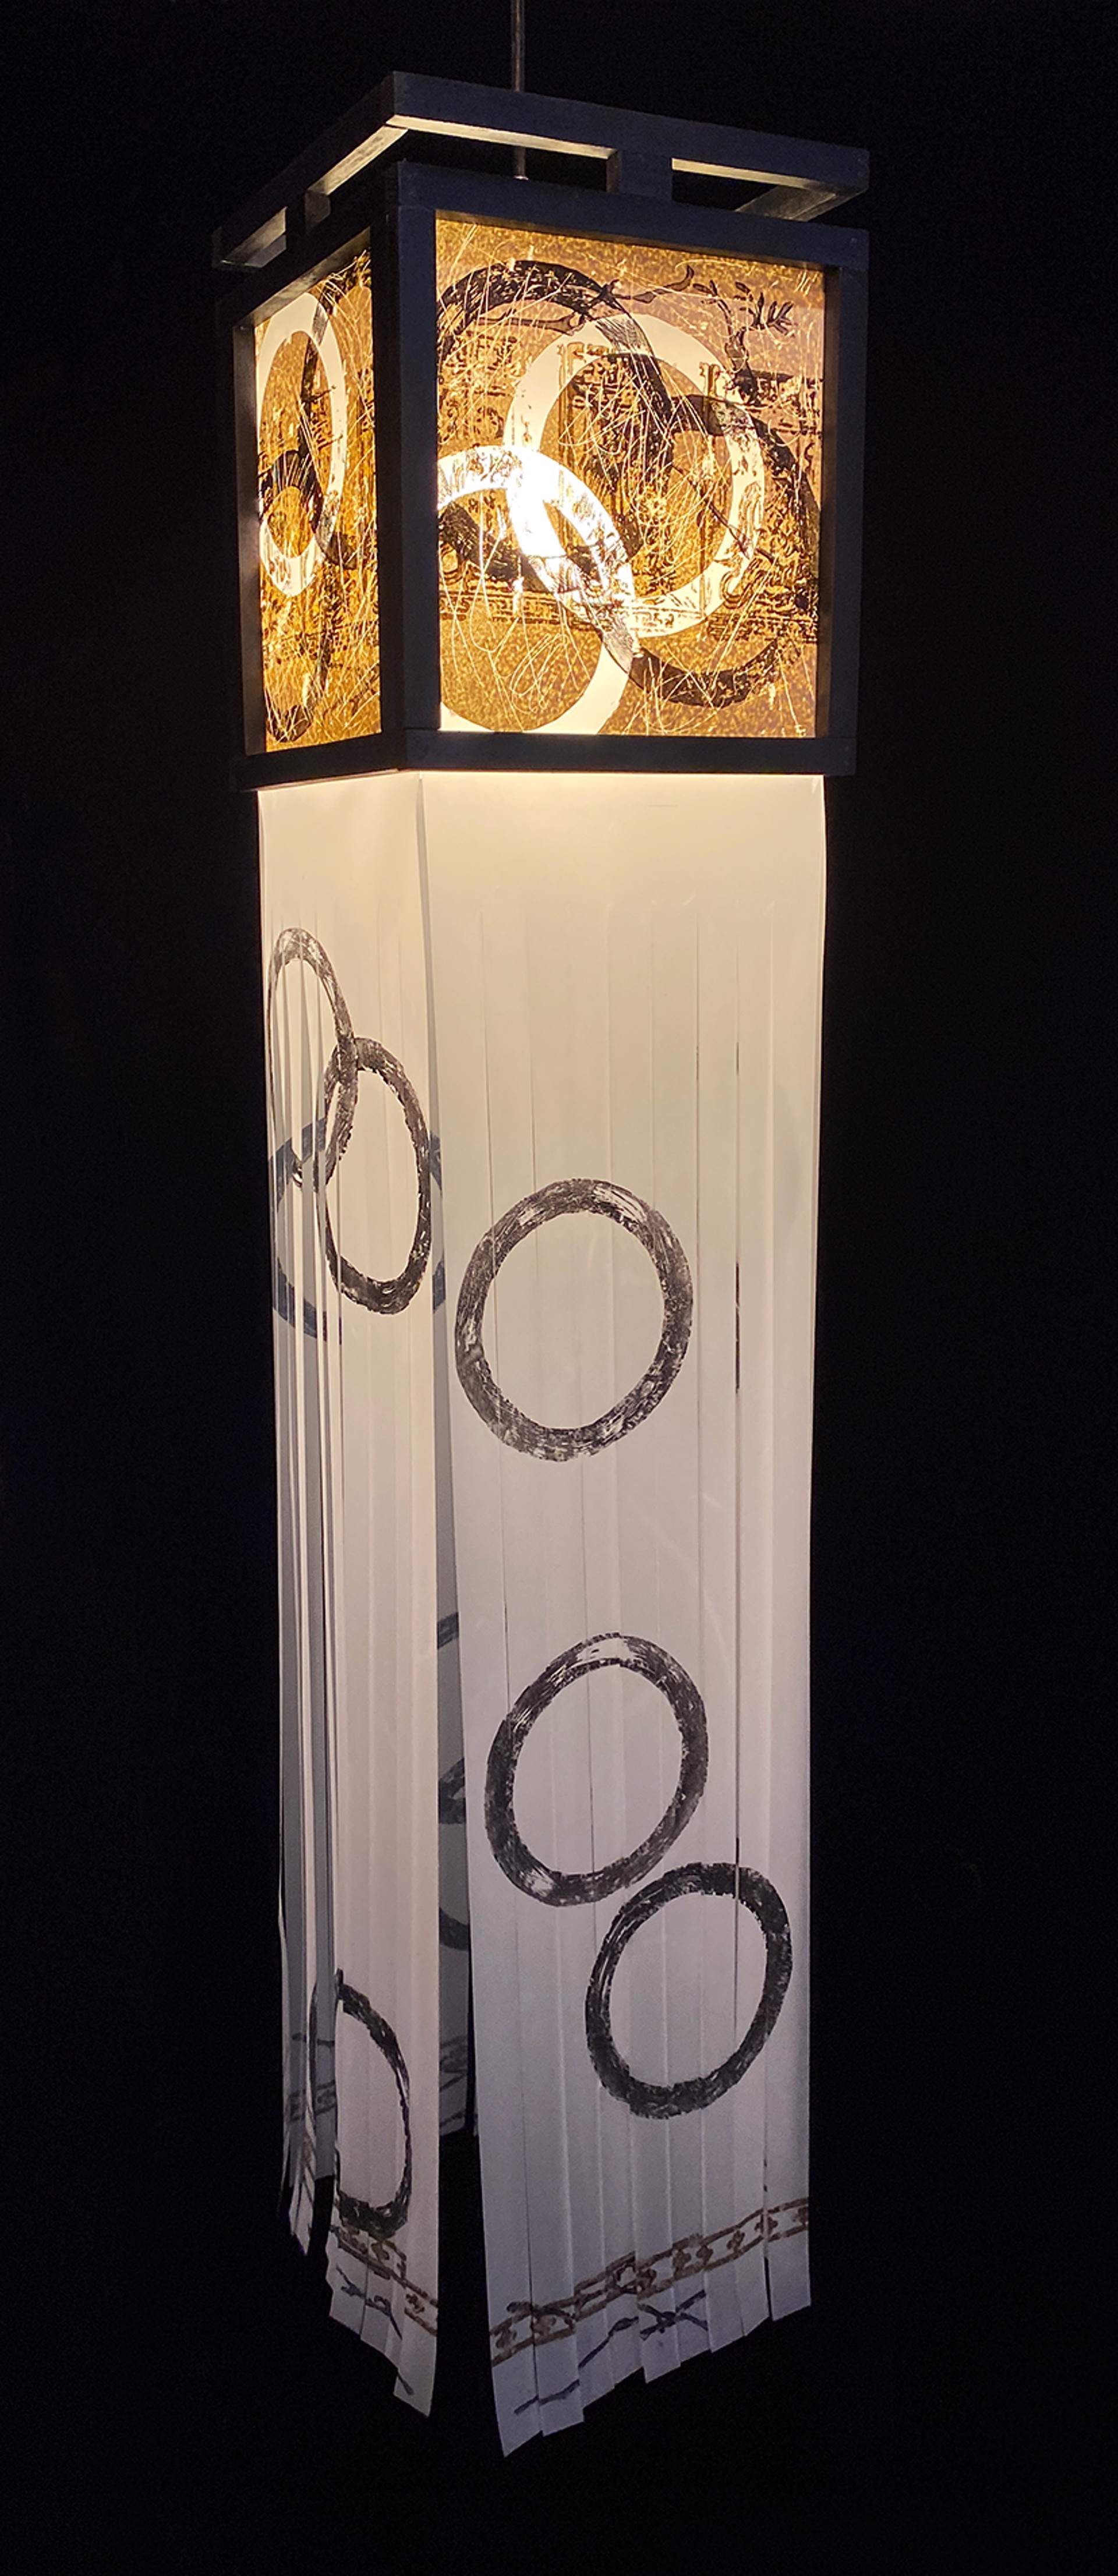 Hanging Lantern I by Elaine Hanowell